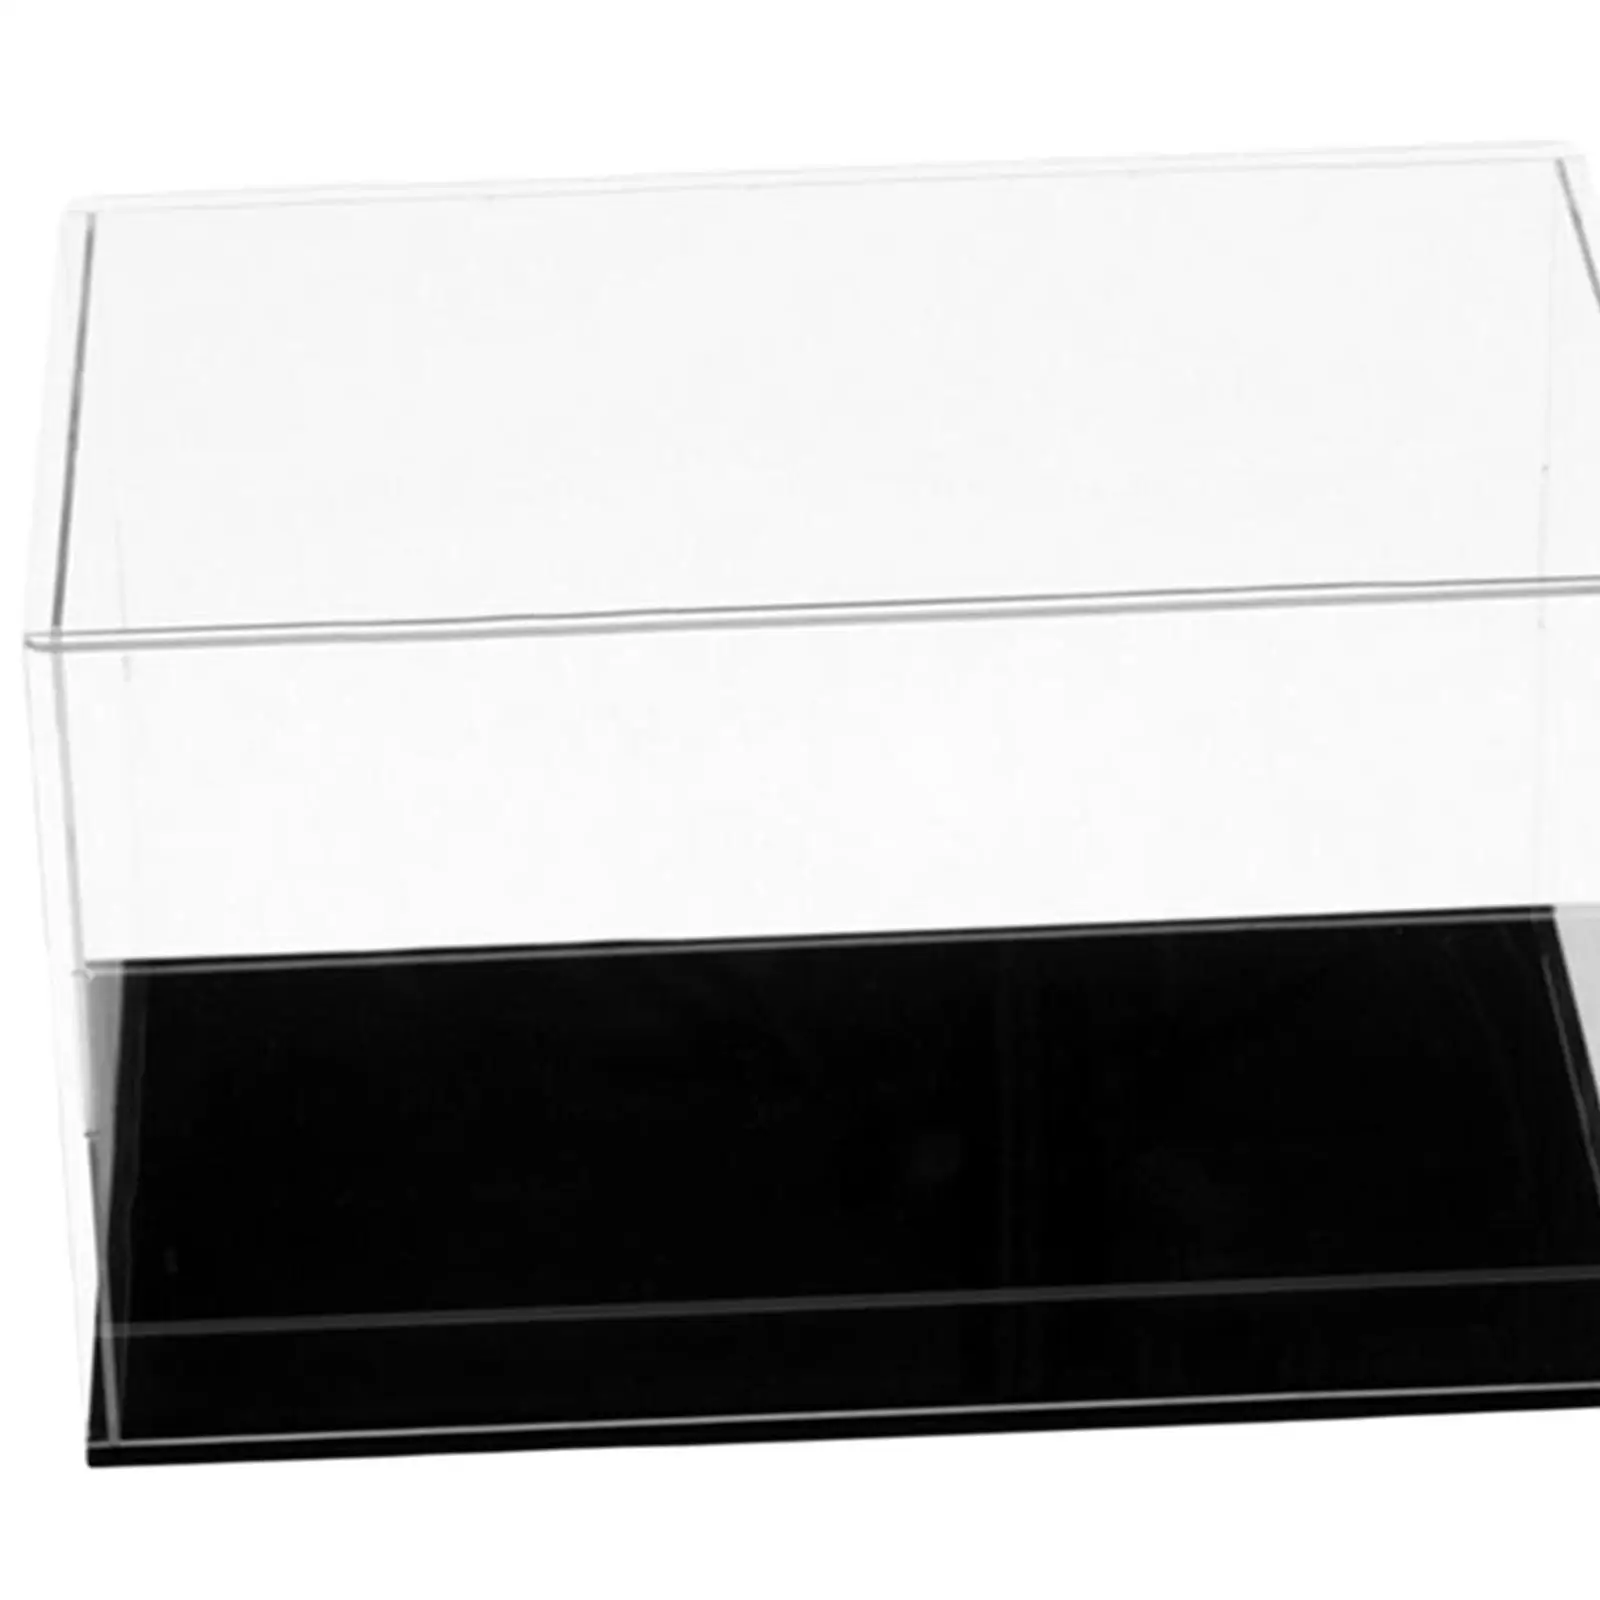 Transparent Acrylic Display Box Portable Countertop Showcase Model Display for Car Model Souvenirs Models Toys Collectibles